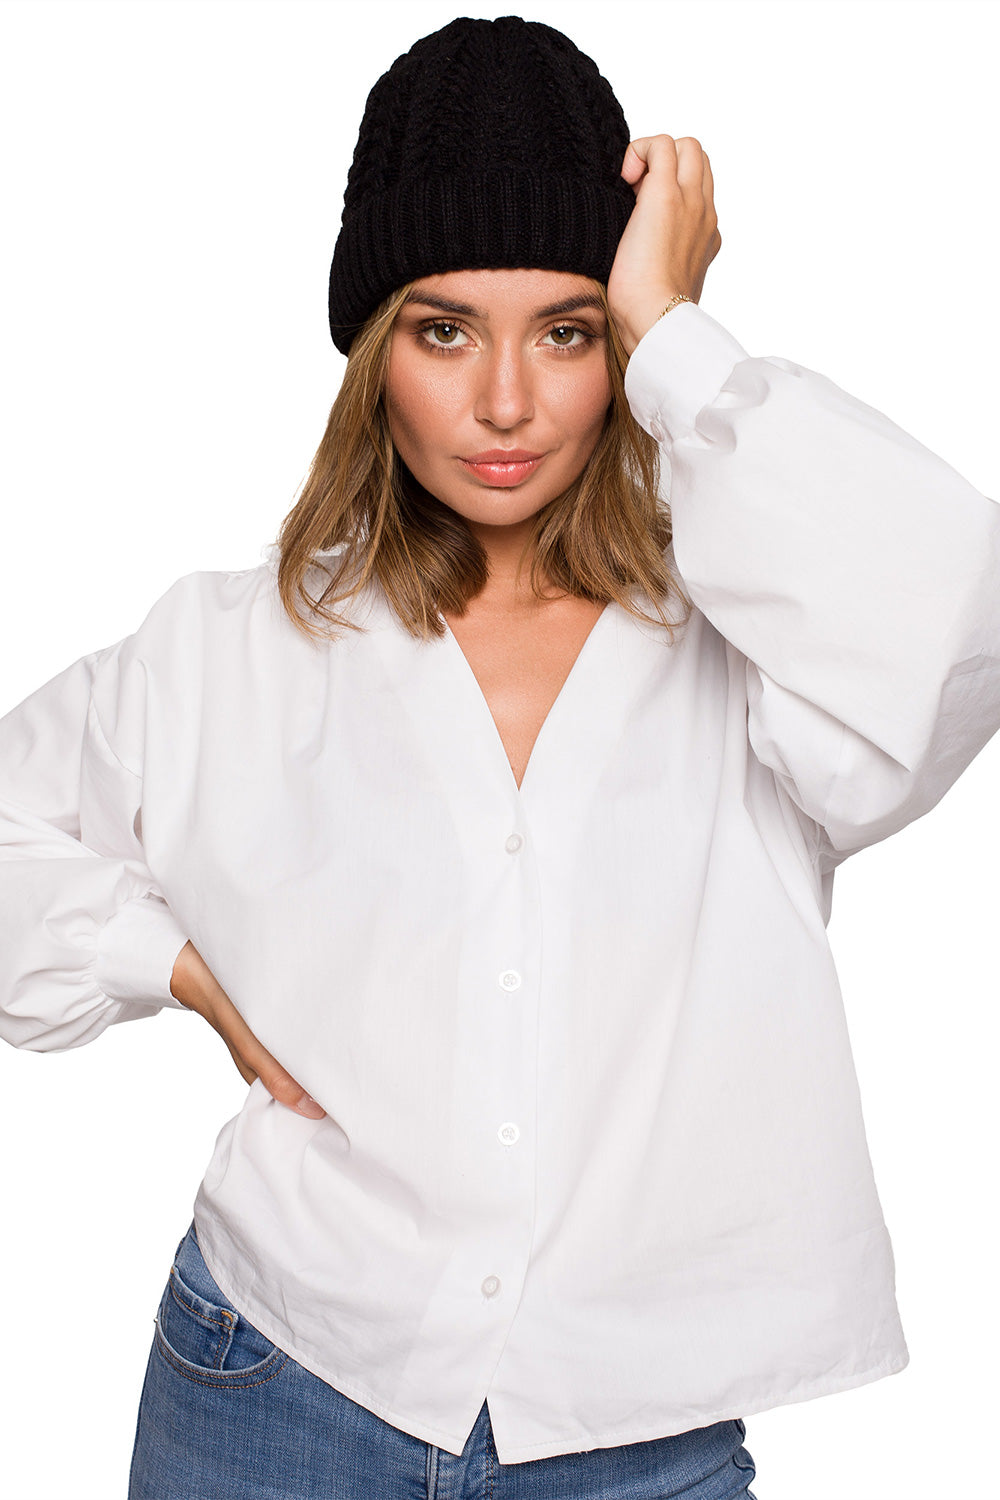 Cap model 157576 Elsy Style Caps & Hats for Women